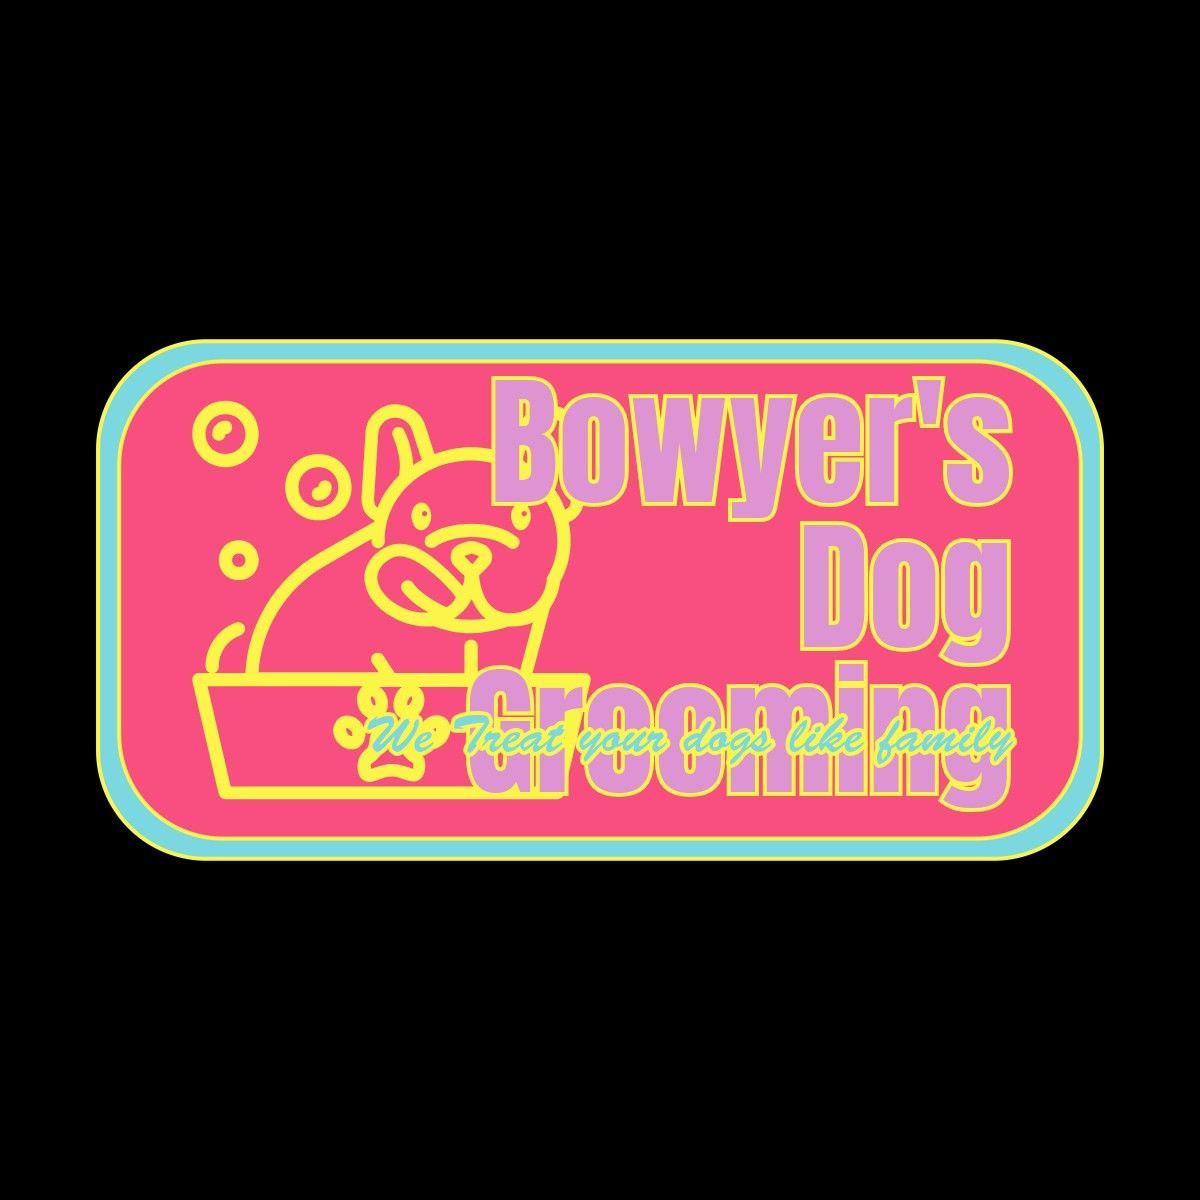 Bowyer's Dog Grooming, 200 Beasley Rd, Honea Path, 29654